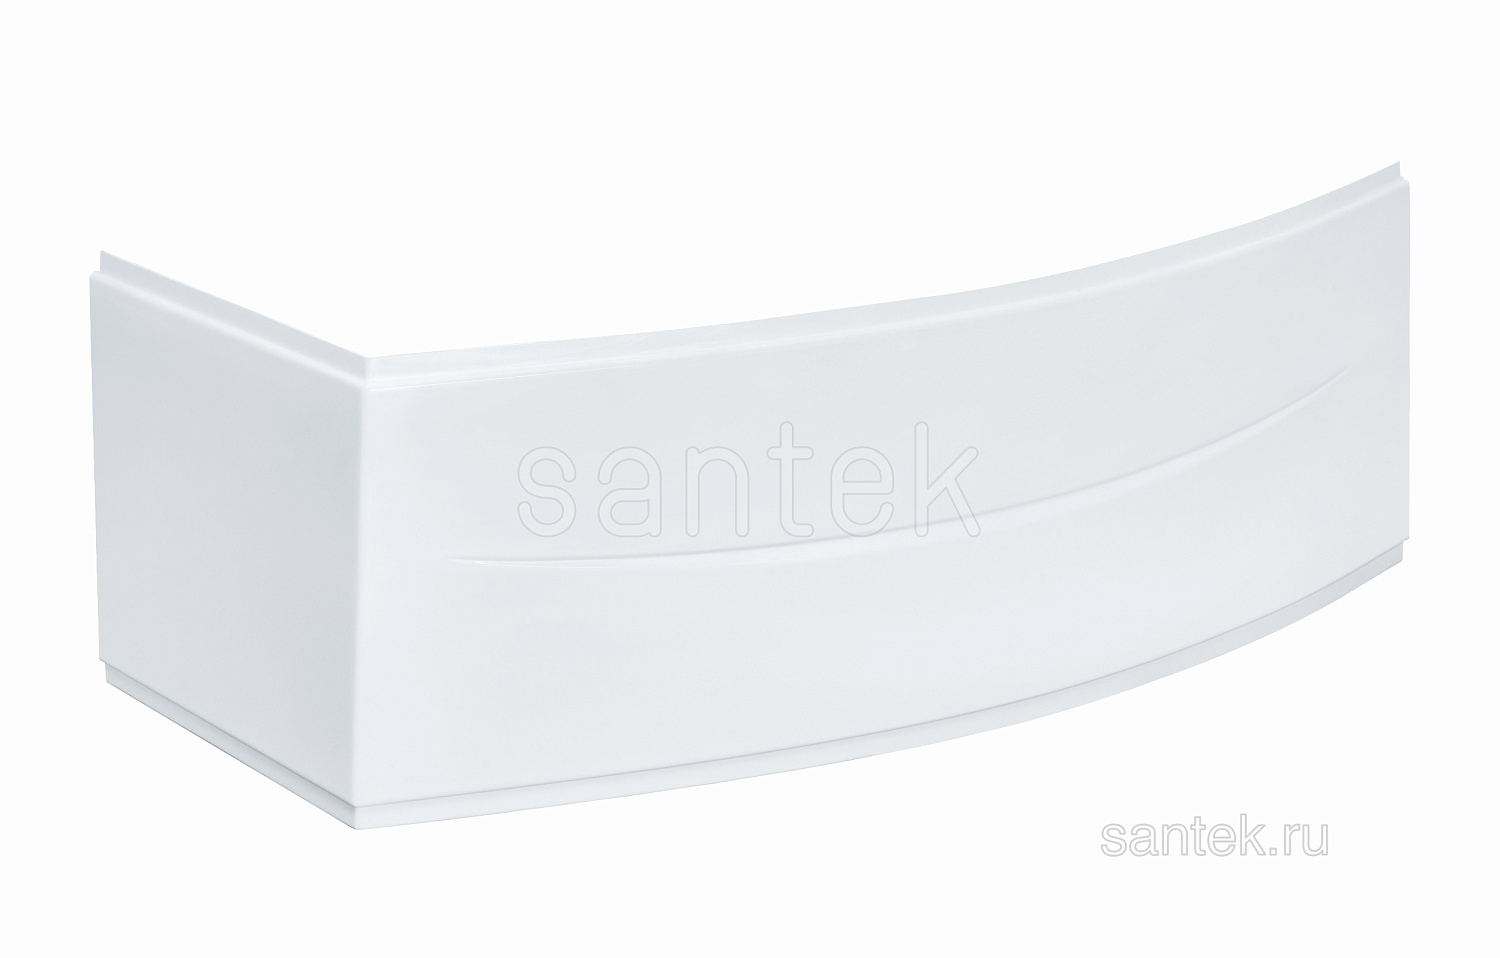 Ванна Santek Майорка XL 160х95 R асимметричная белая 1WH111990